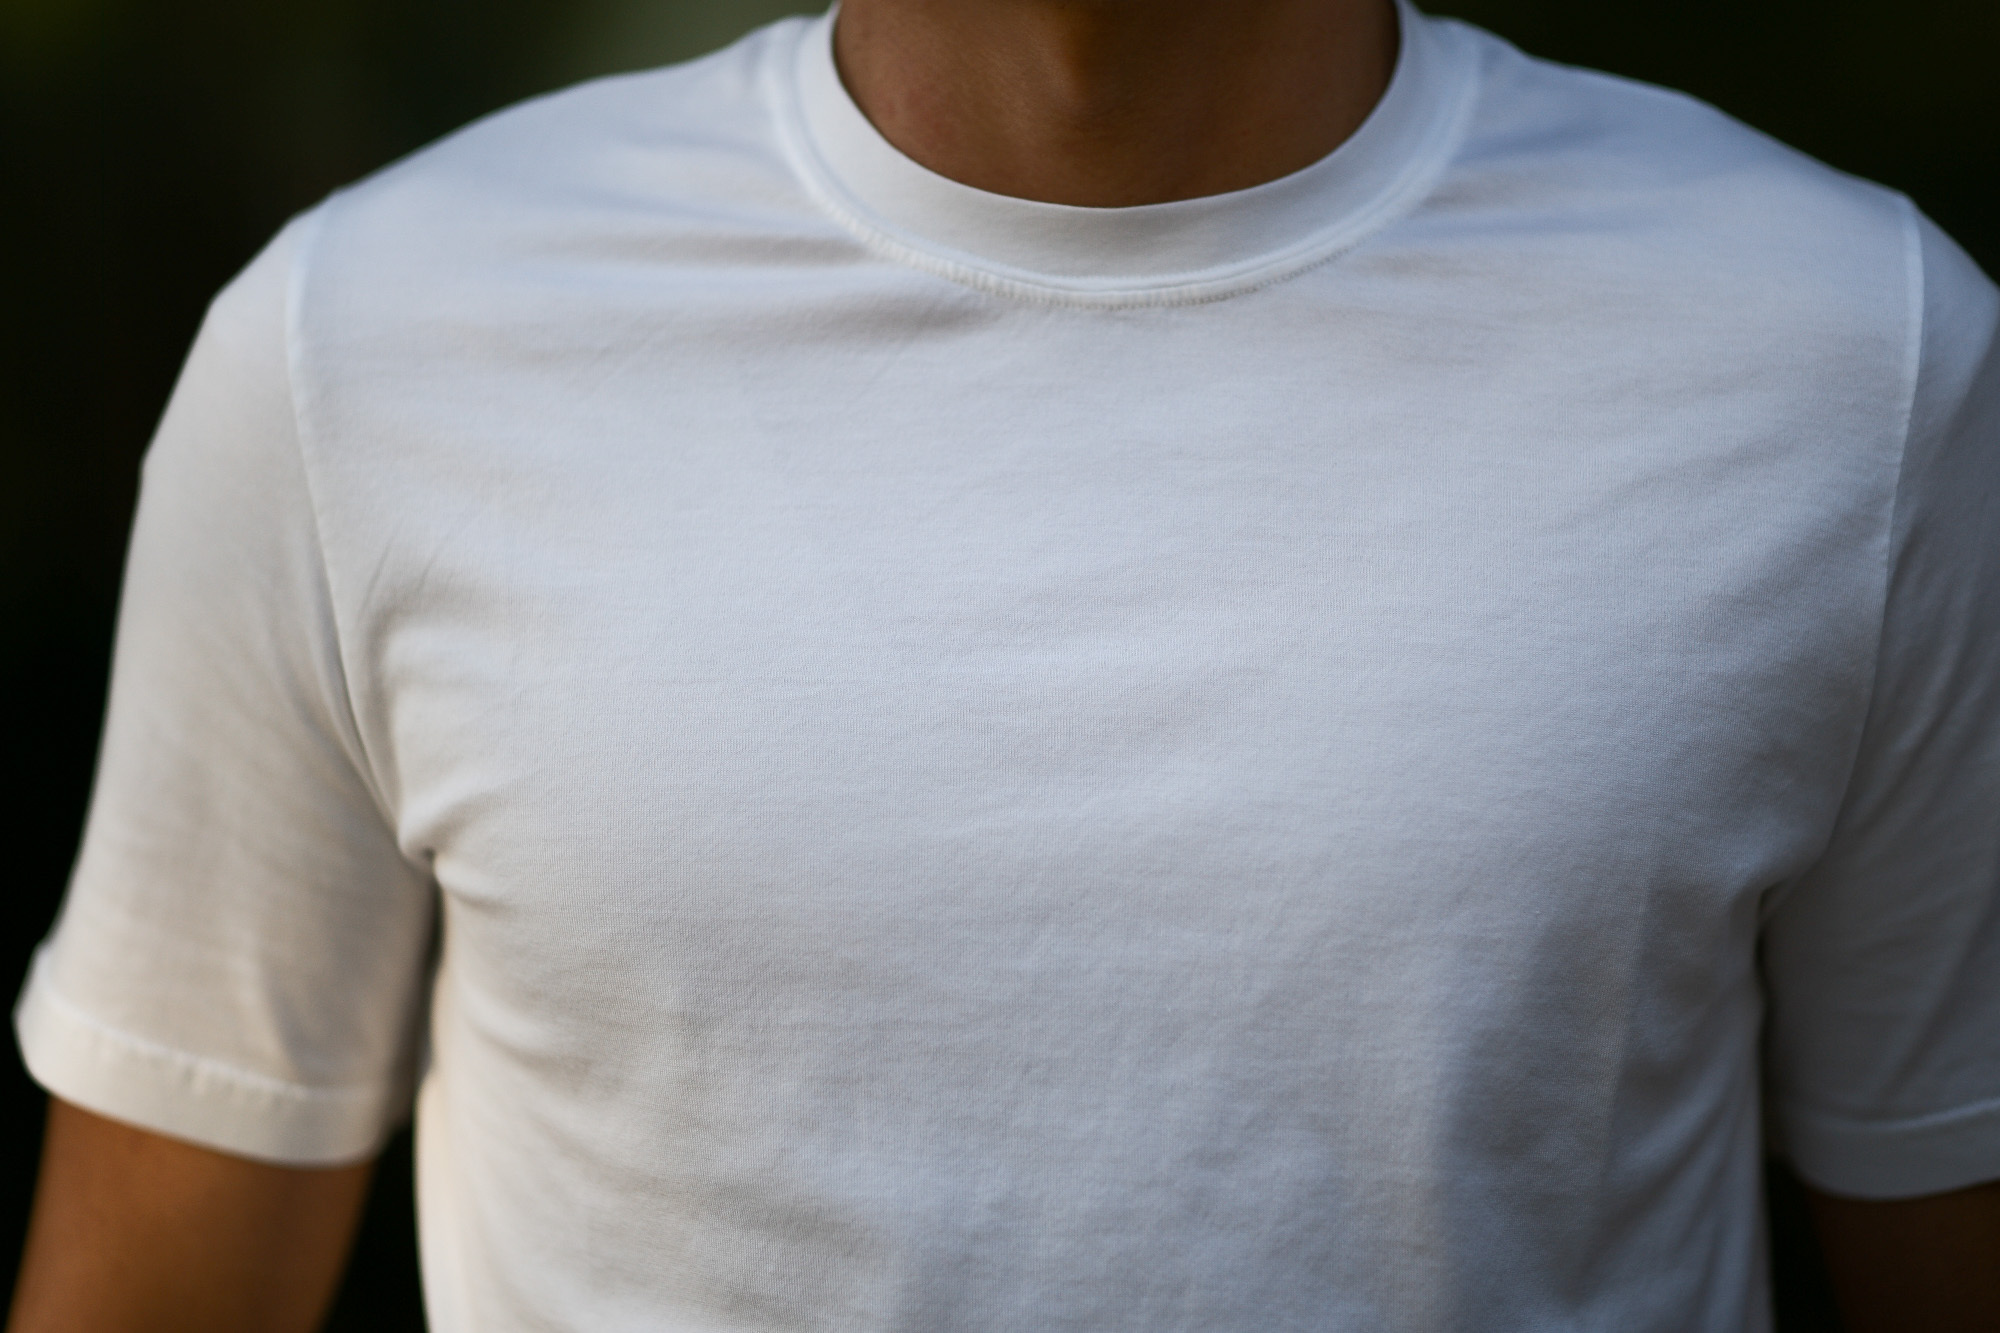 FEDELI(フェデーリ) Crew Neck T-shirt (クルーネック Tシャツ) ギザコットン Tシャツ WHITE (ホワイト・41) made in italy (イタリア製) 2020 春夏 【ご予約受付中】 愛知 名古屋 altoediritto アルトエデリット TEE